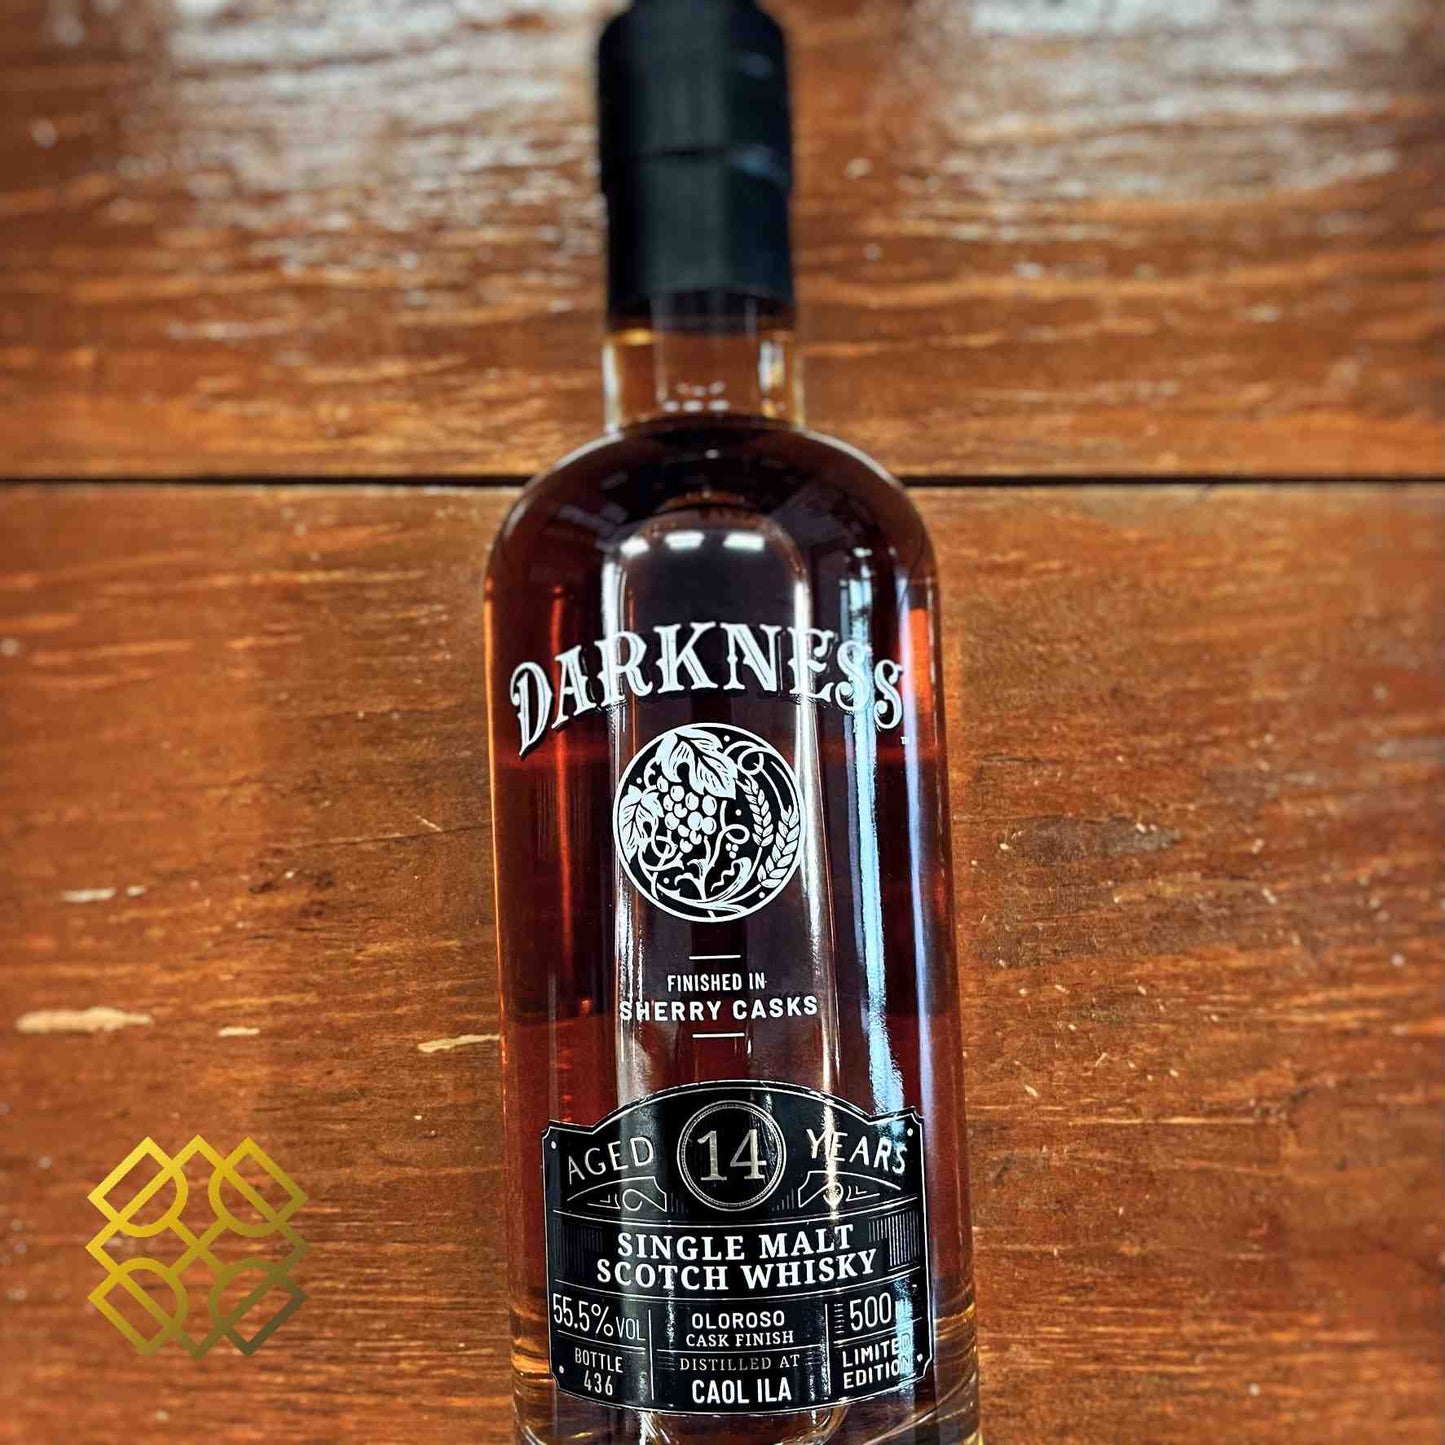 Darkness! Caol Ila - 14YO, Oloroso Cask Finish, 55.5% Type : Single malt whisky